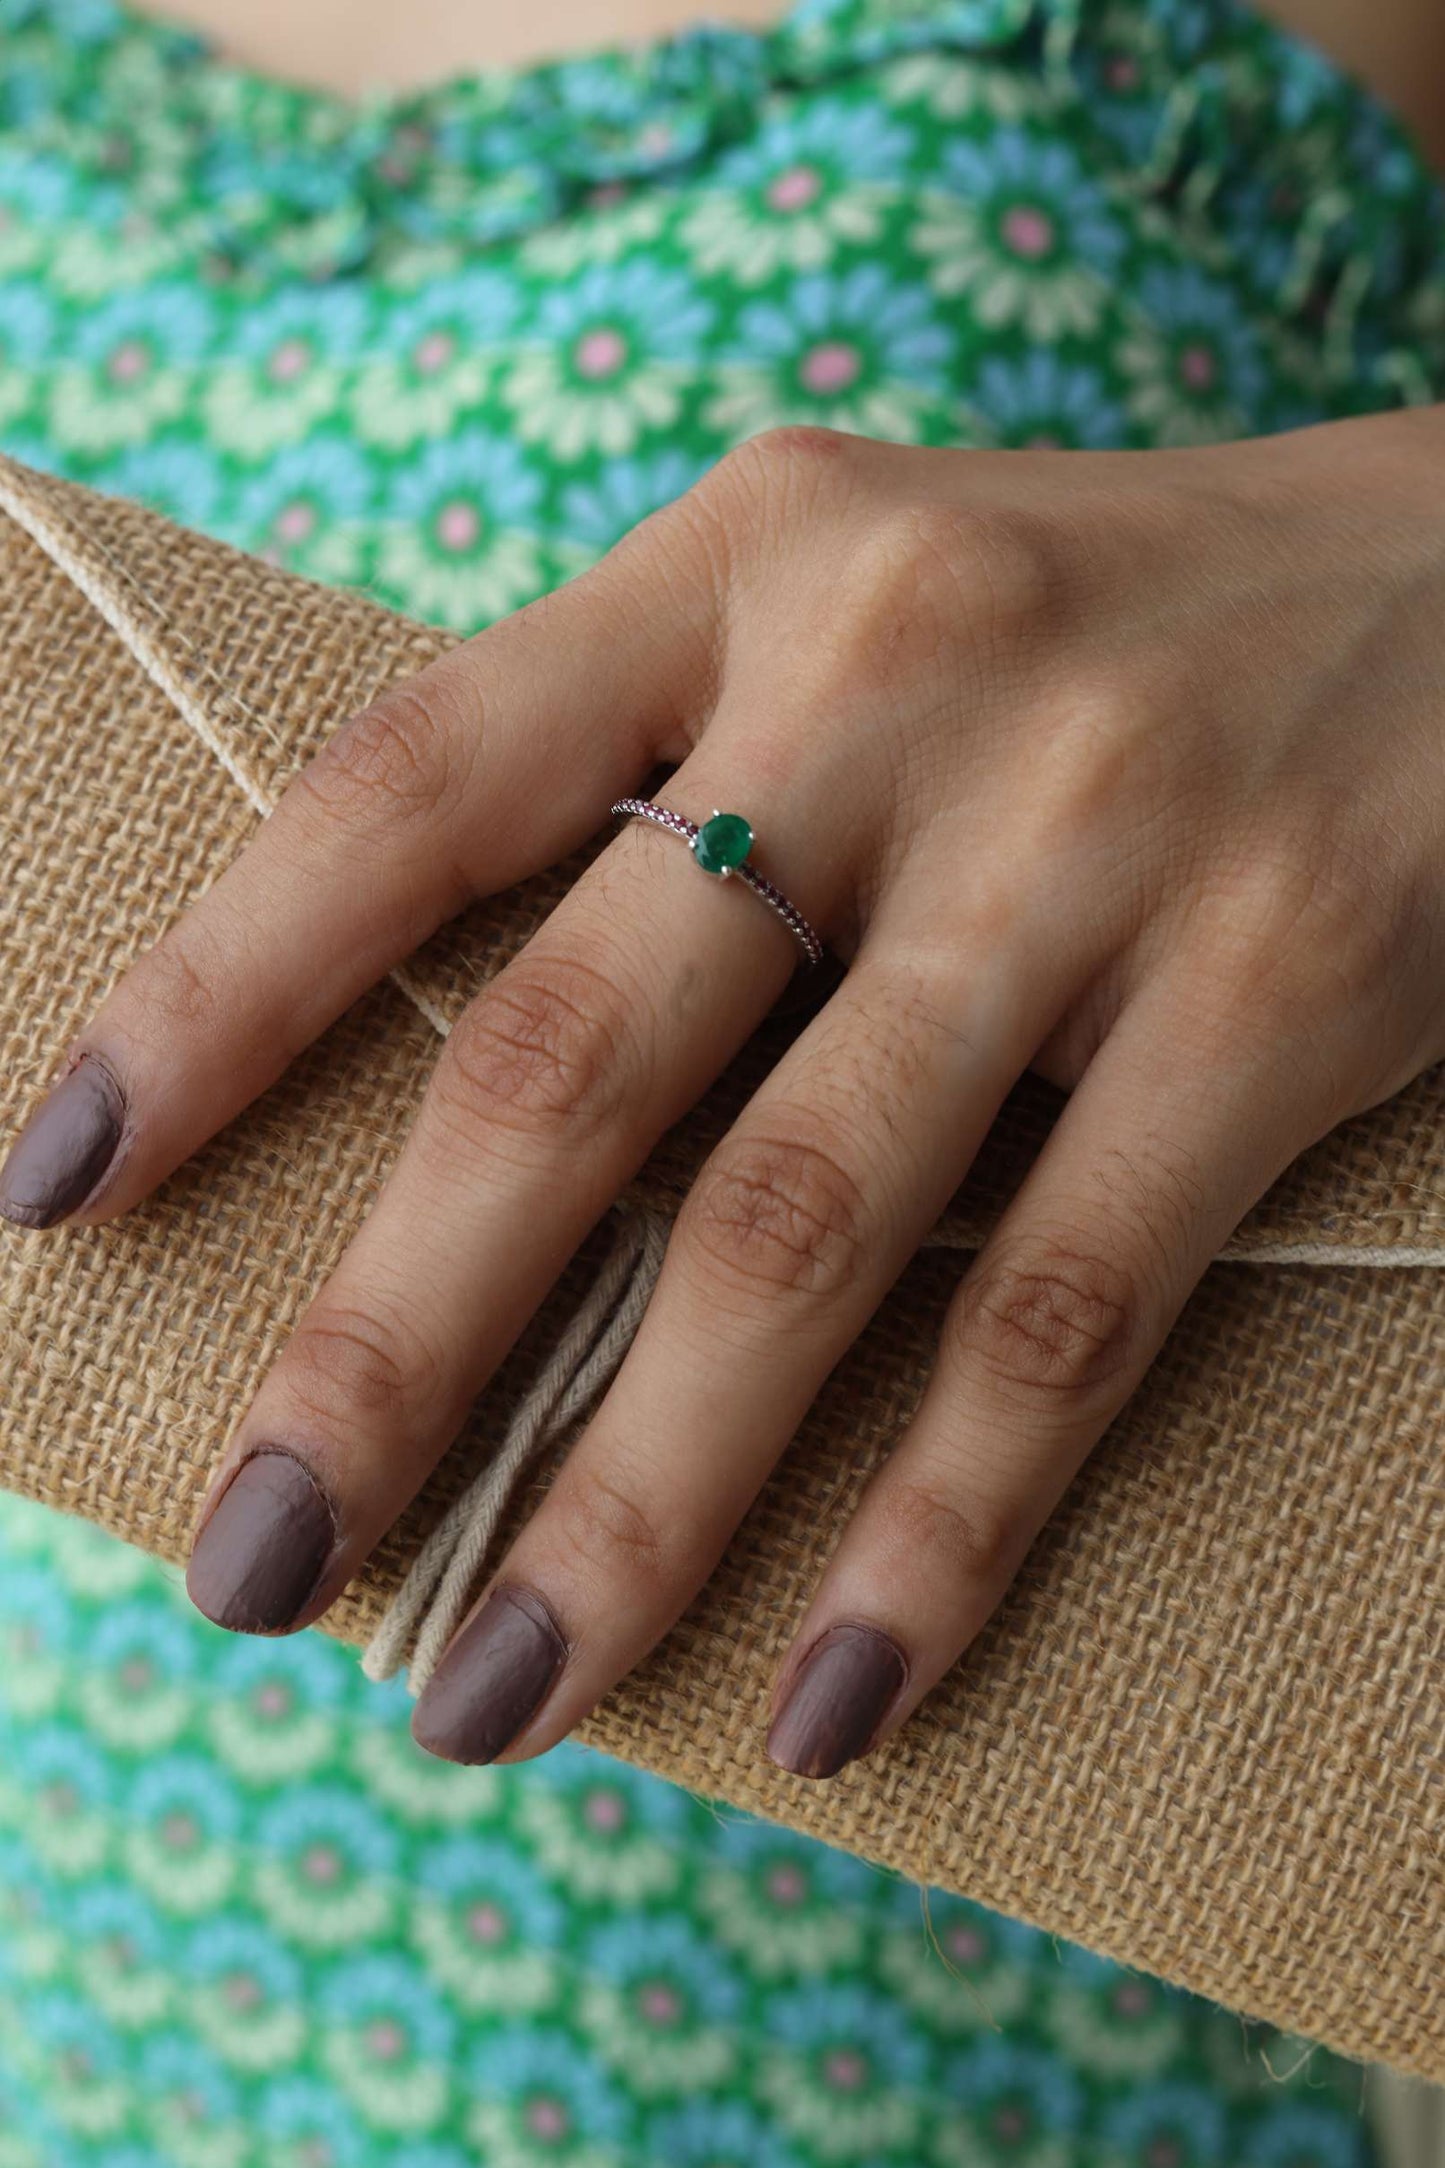 Petite Emerald Ruby Ring